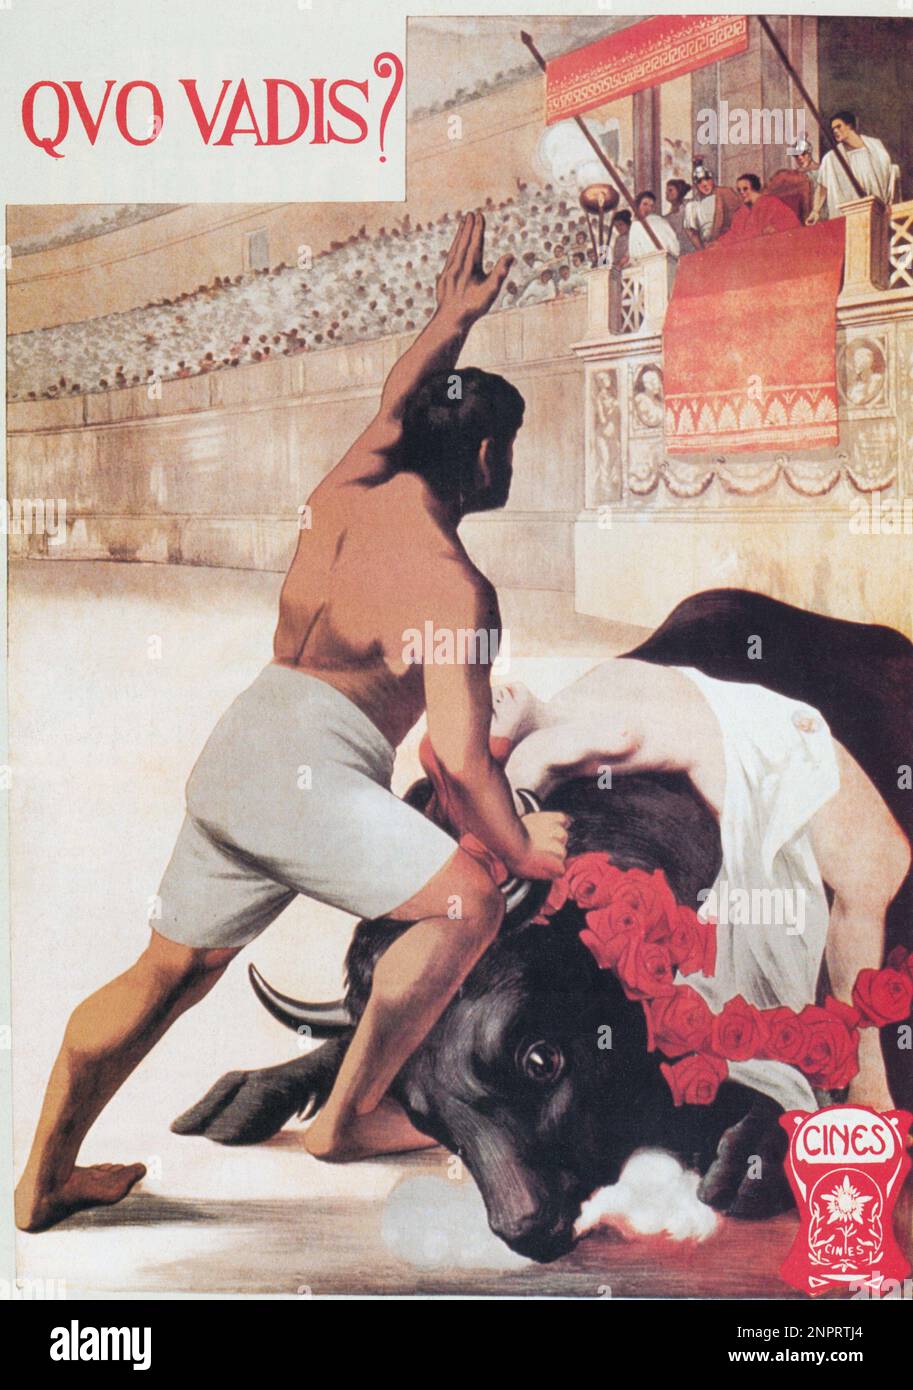 1912 :Original poster advertising for the italian silent movie QUO VADIS ?  by  ENRICO GUAZZONI , with Amleto Novelli , from a novel by Henryk Sienkiewicz - CINEMA MUTO ITALIANO - FILM - MOVIE  - HORROR - orrore  - triller - MANIFESTO CINEMATOGRAFICO - saluto fascista - gladiatore - gladiator - Nerone - CINES    ----  Archivio GBB Stock Photo